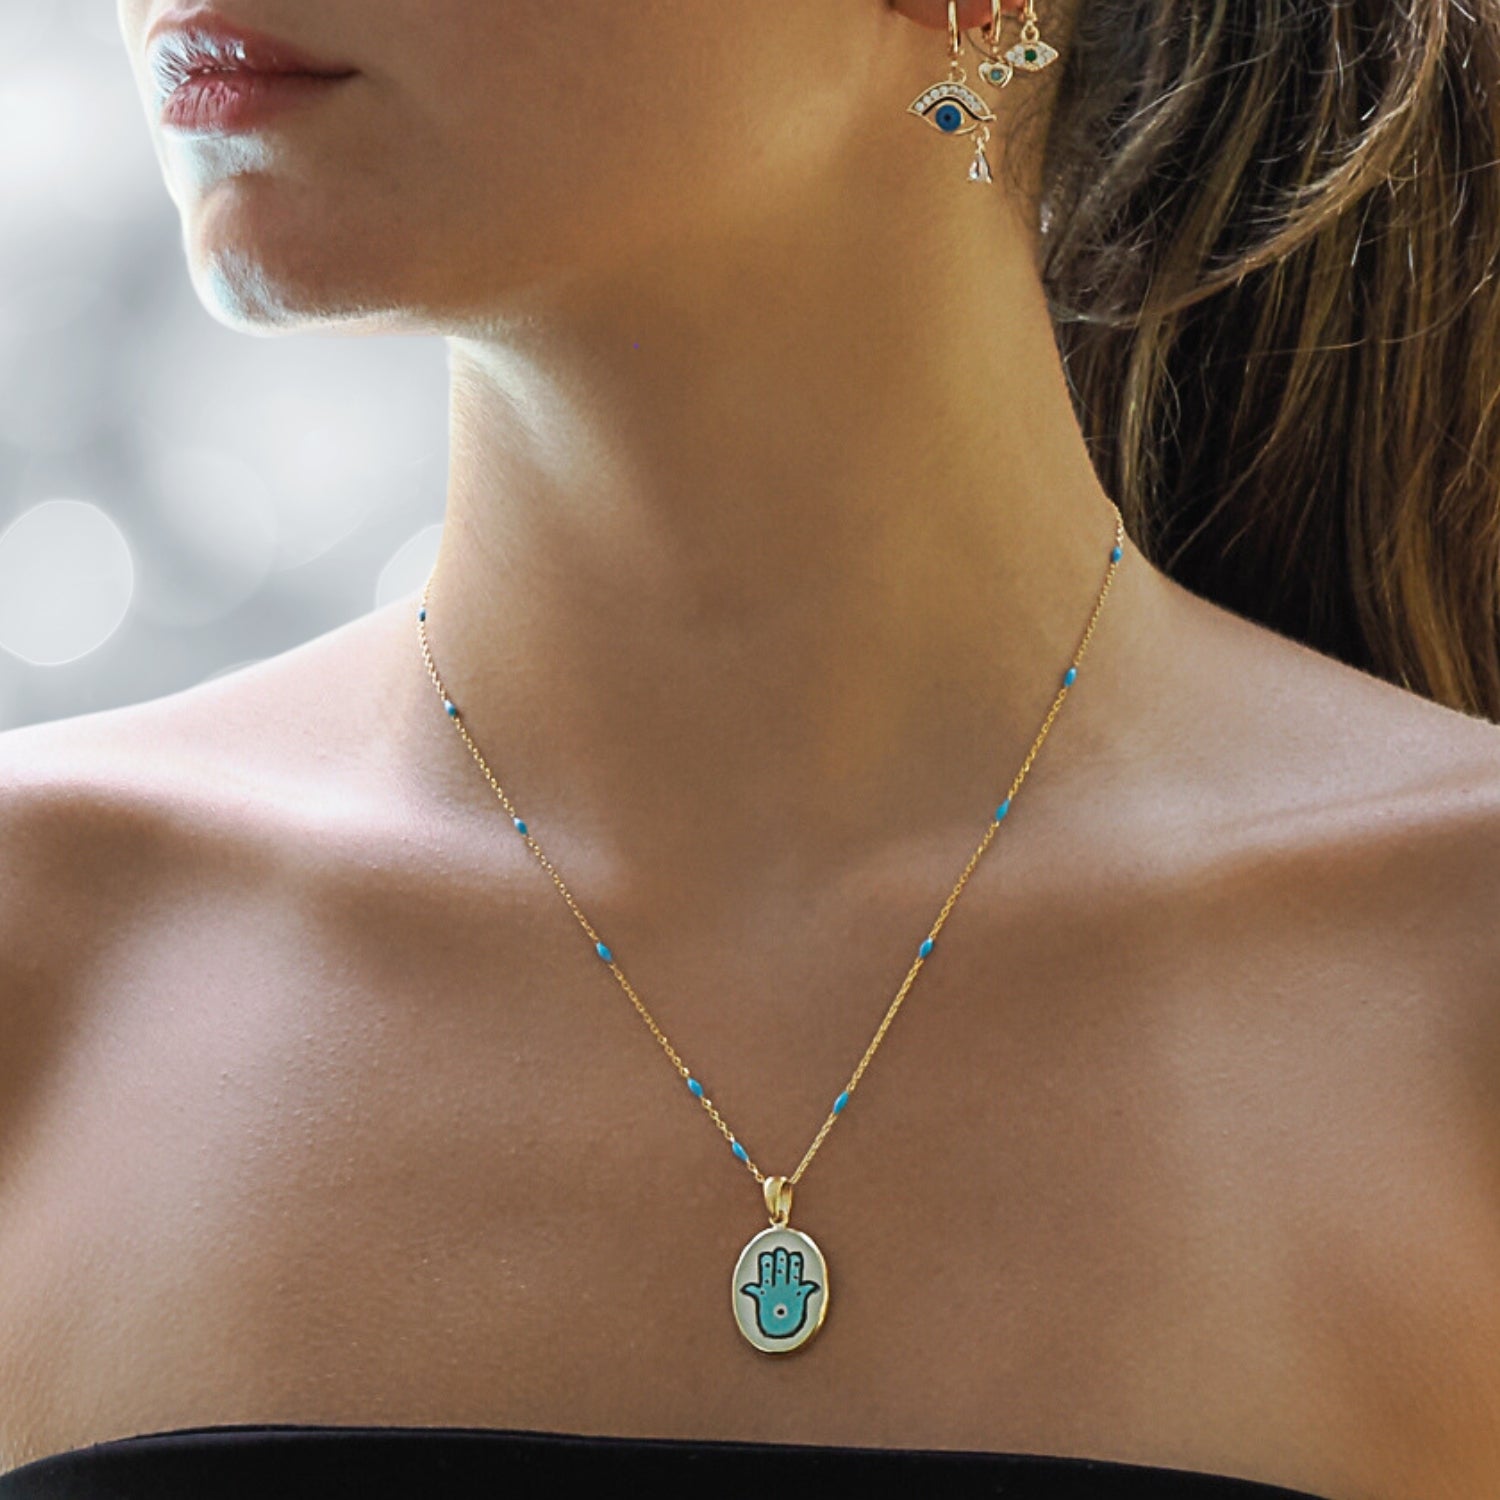 Stylish Model Sporting an Elegant Hamsa Hand Pendant Necklace with Turquoise Enamel.